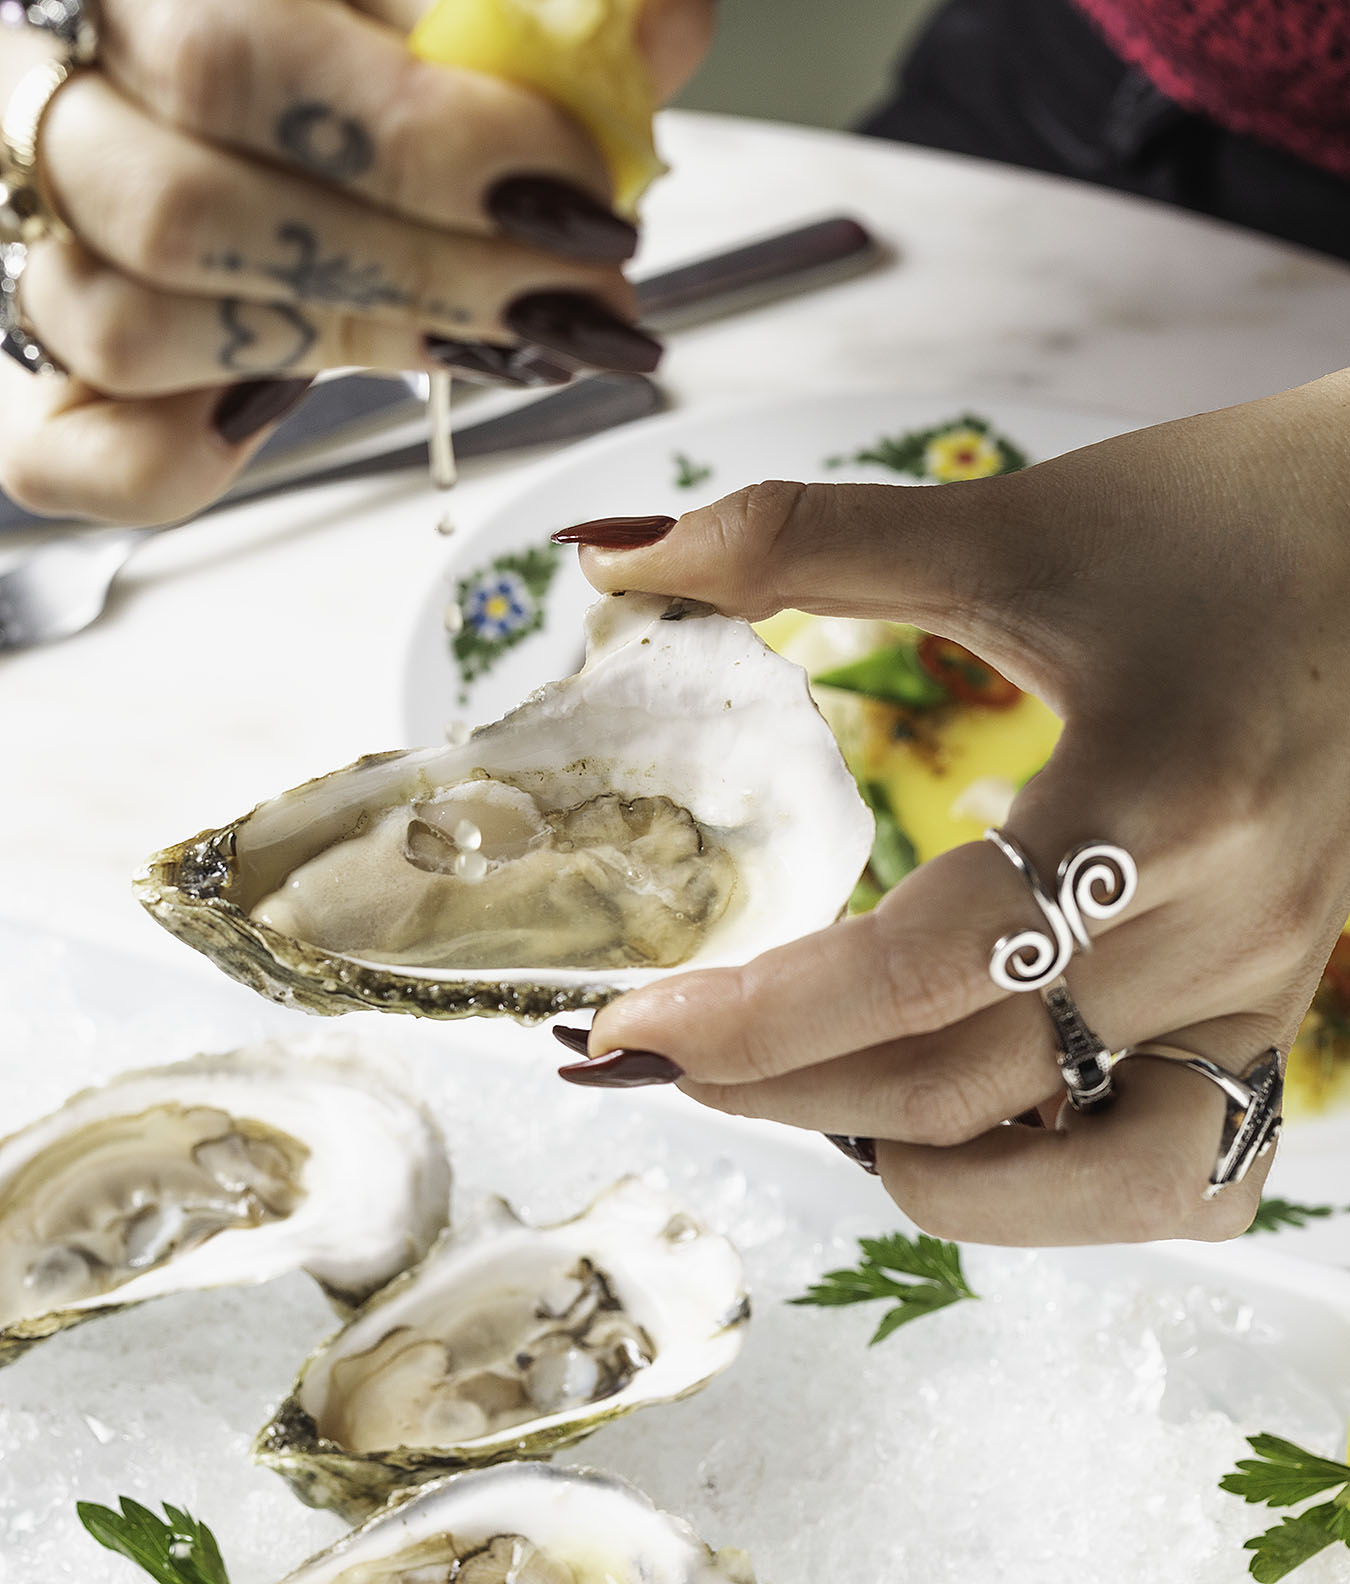 hands sqeezing lemon onto an oyster